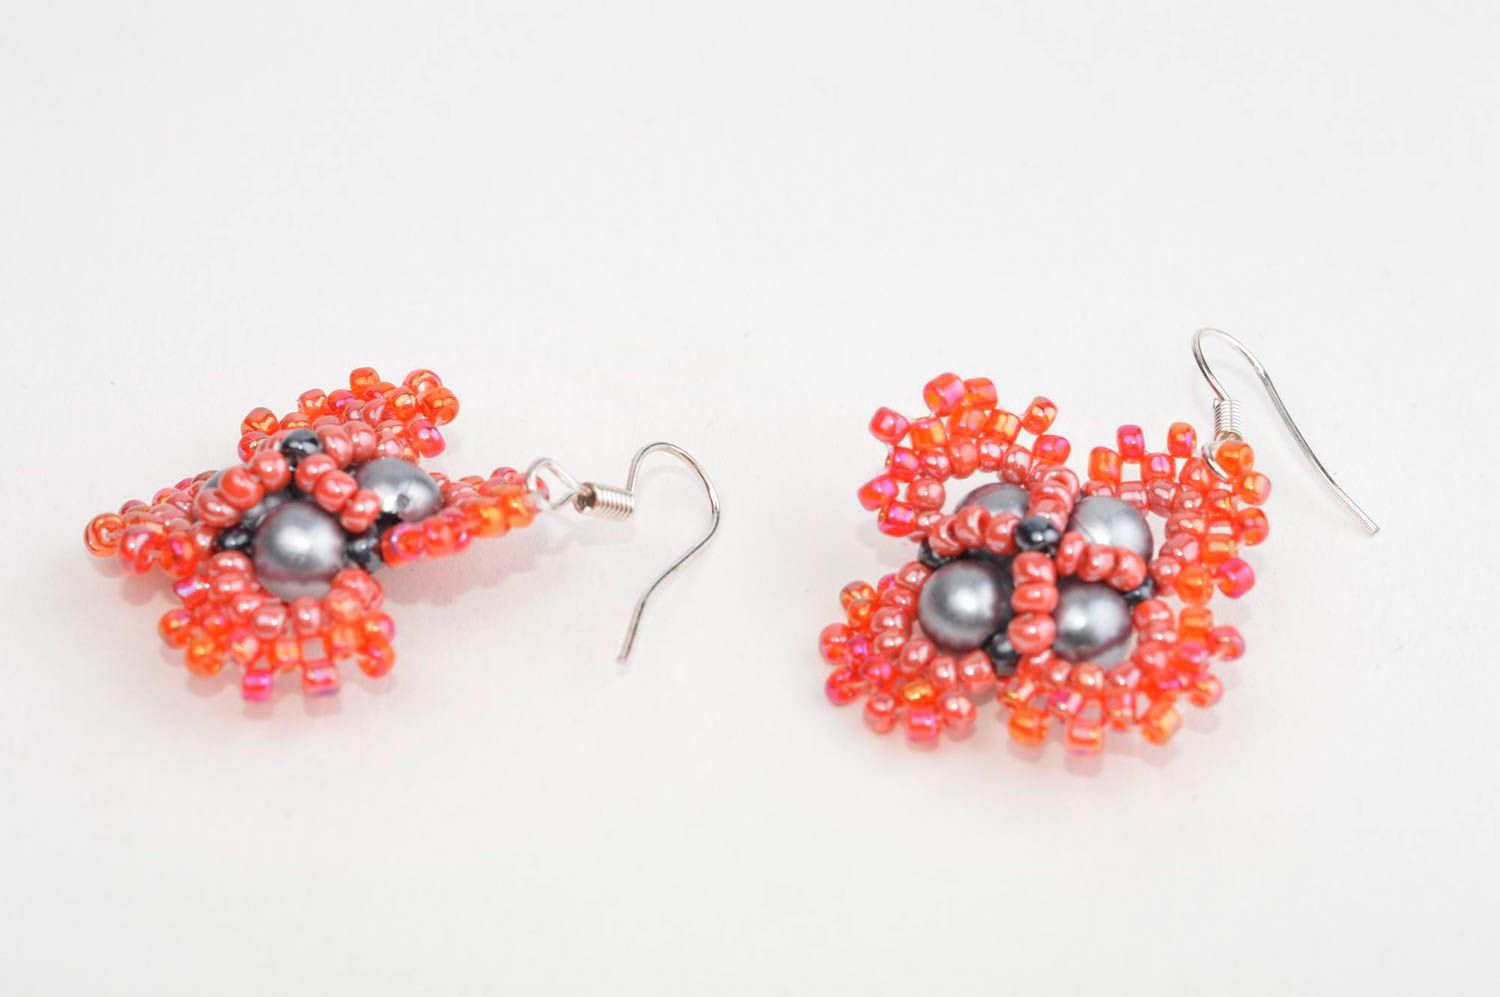 Fashion bijouterie handmade earrings with charms elegant earrings made of beads photo 3